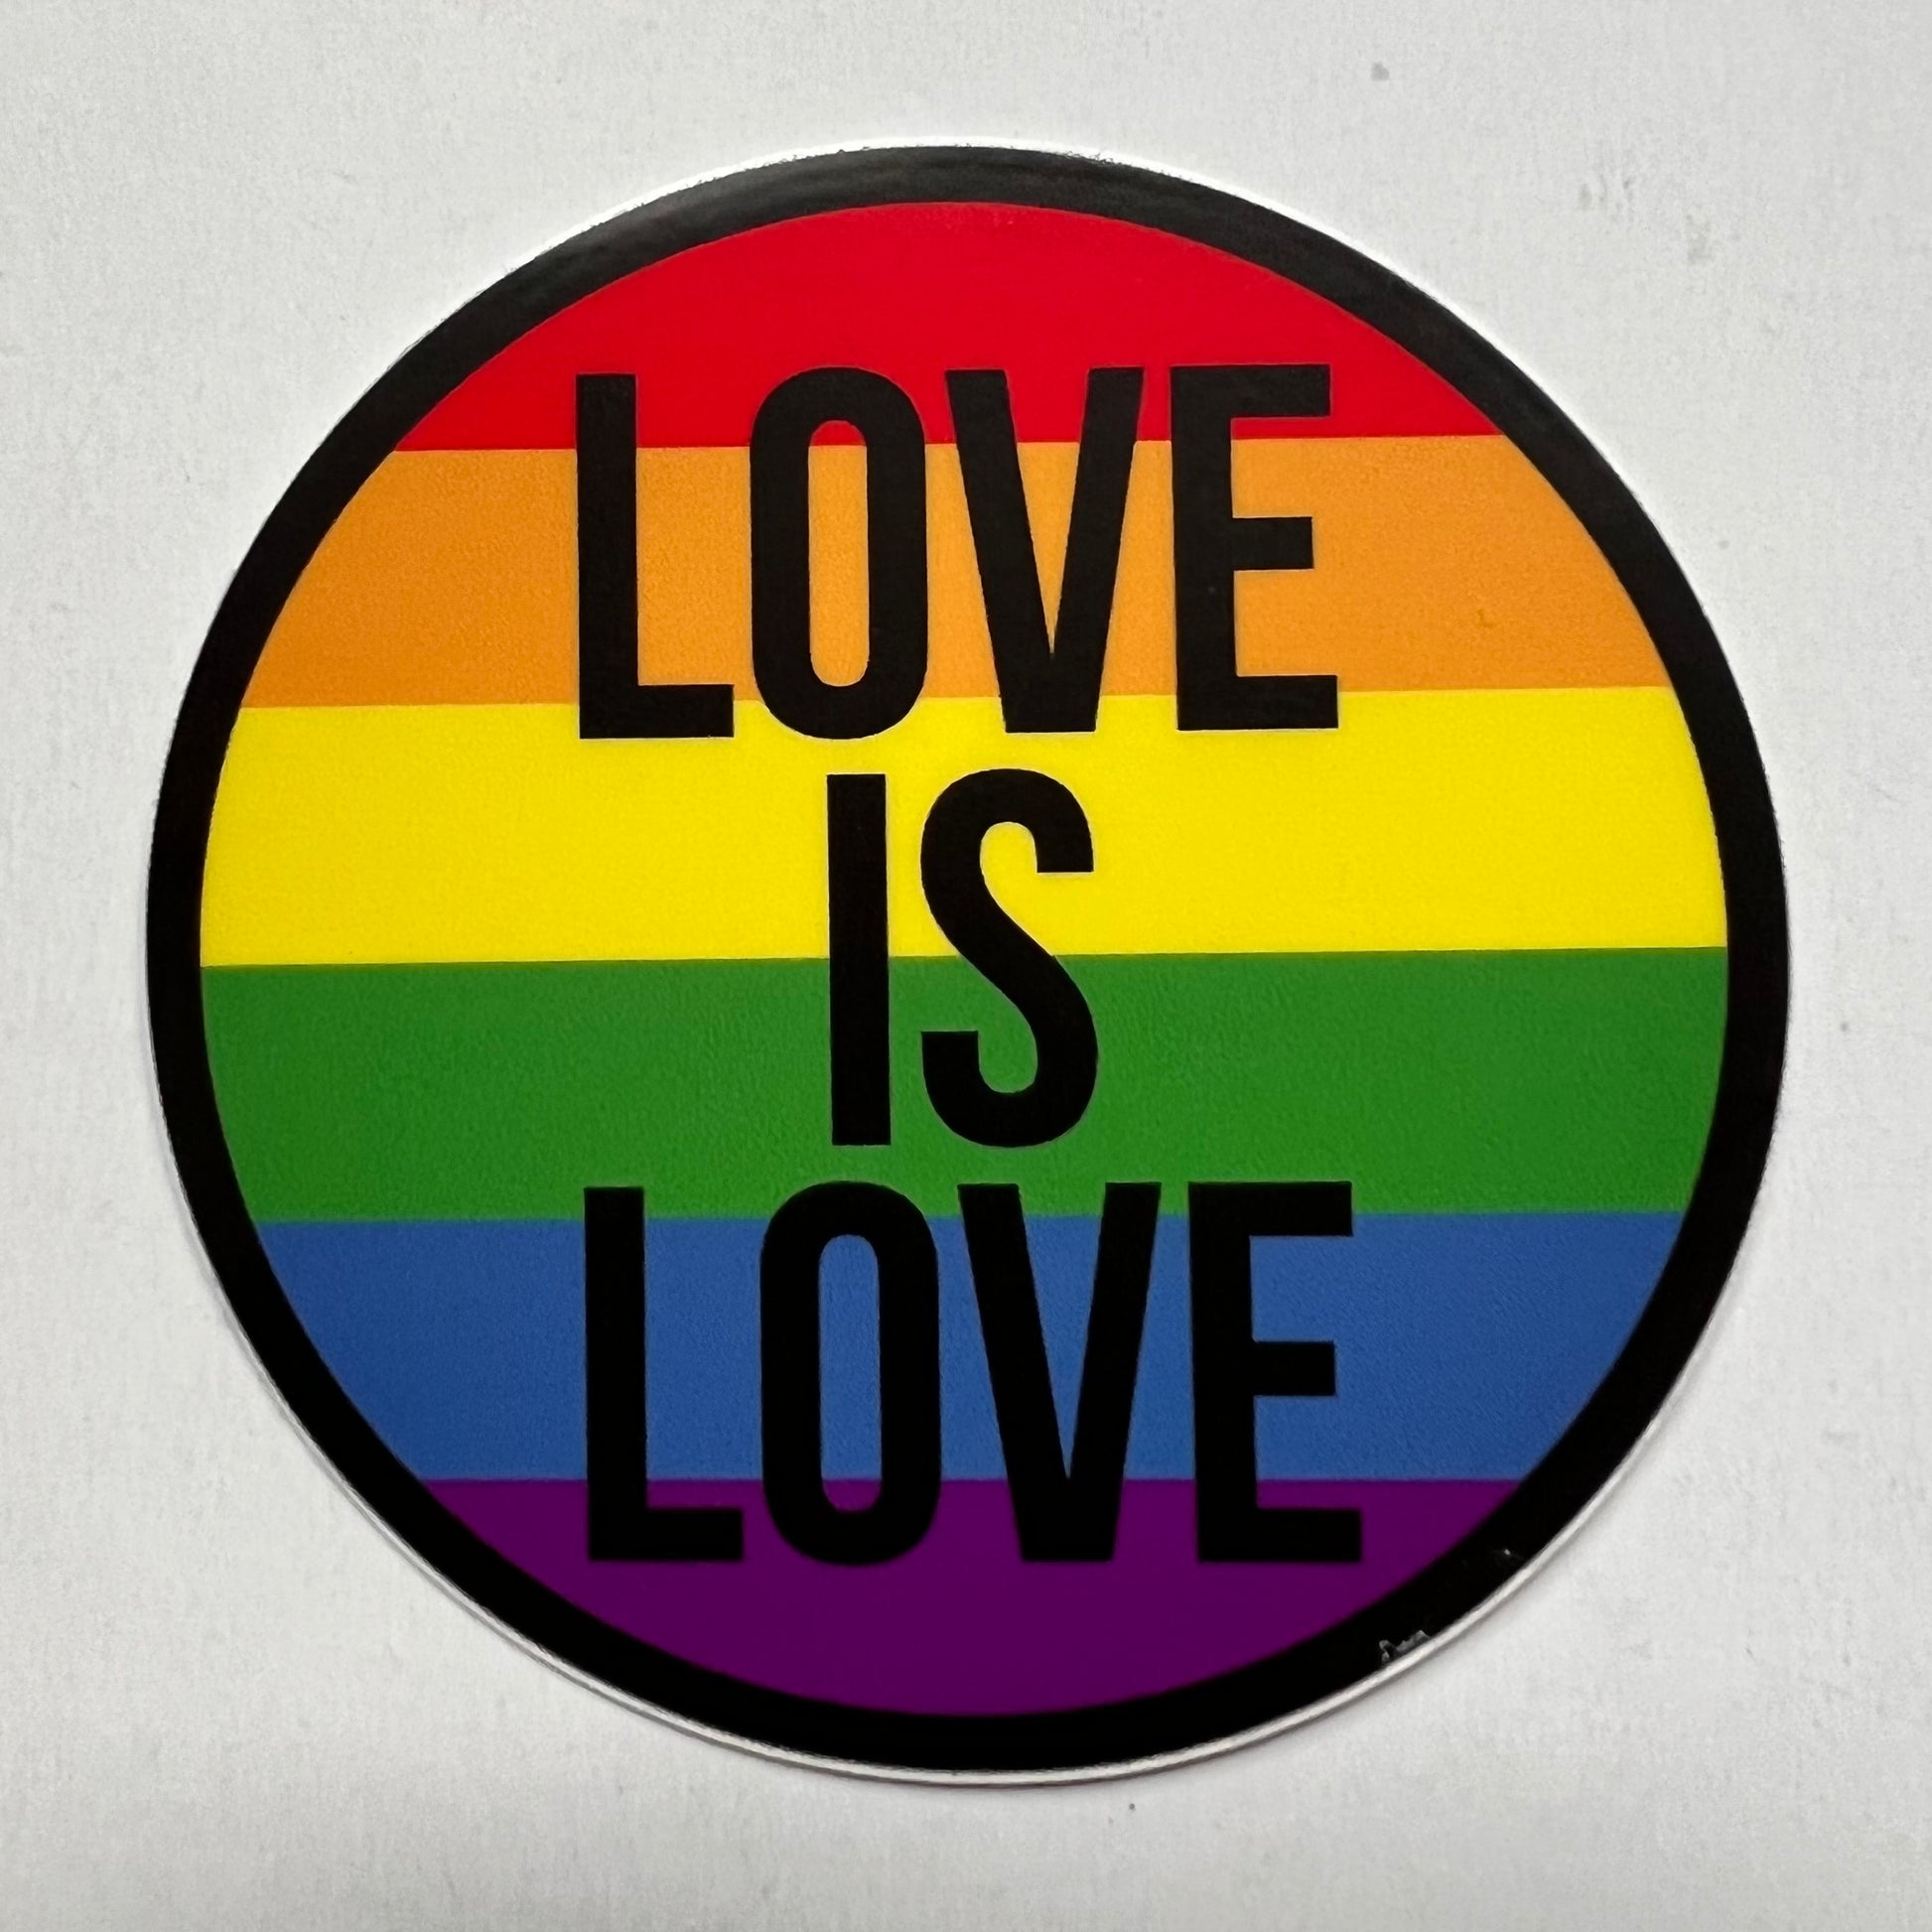 sticker on white background. round sticker has rainbow background with stacked words "love is love" in black.